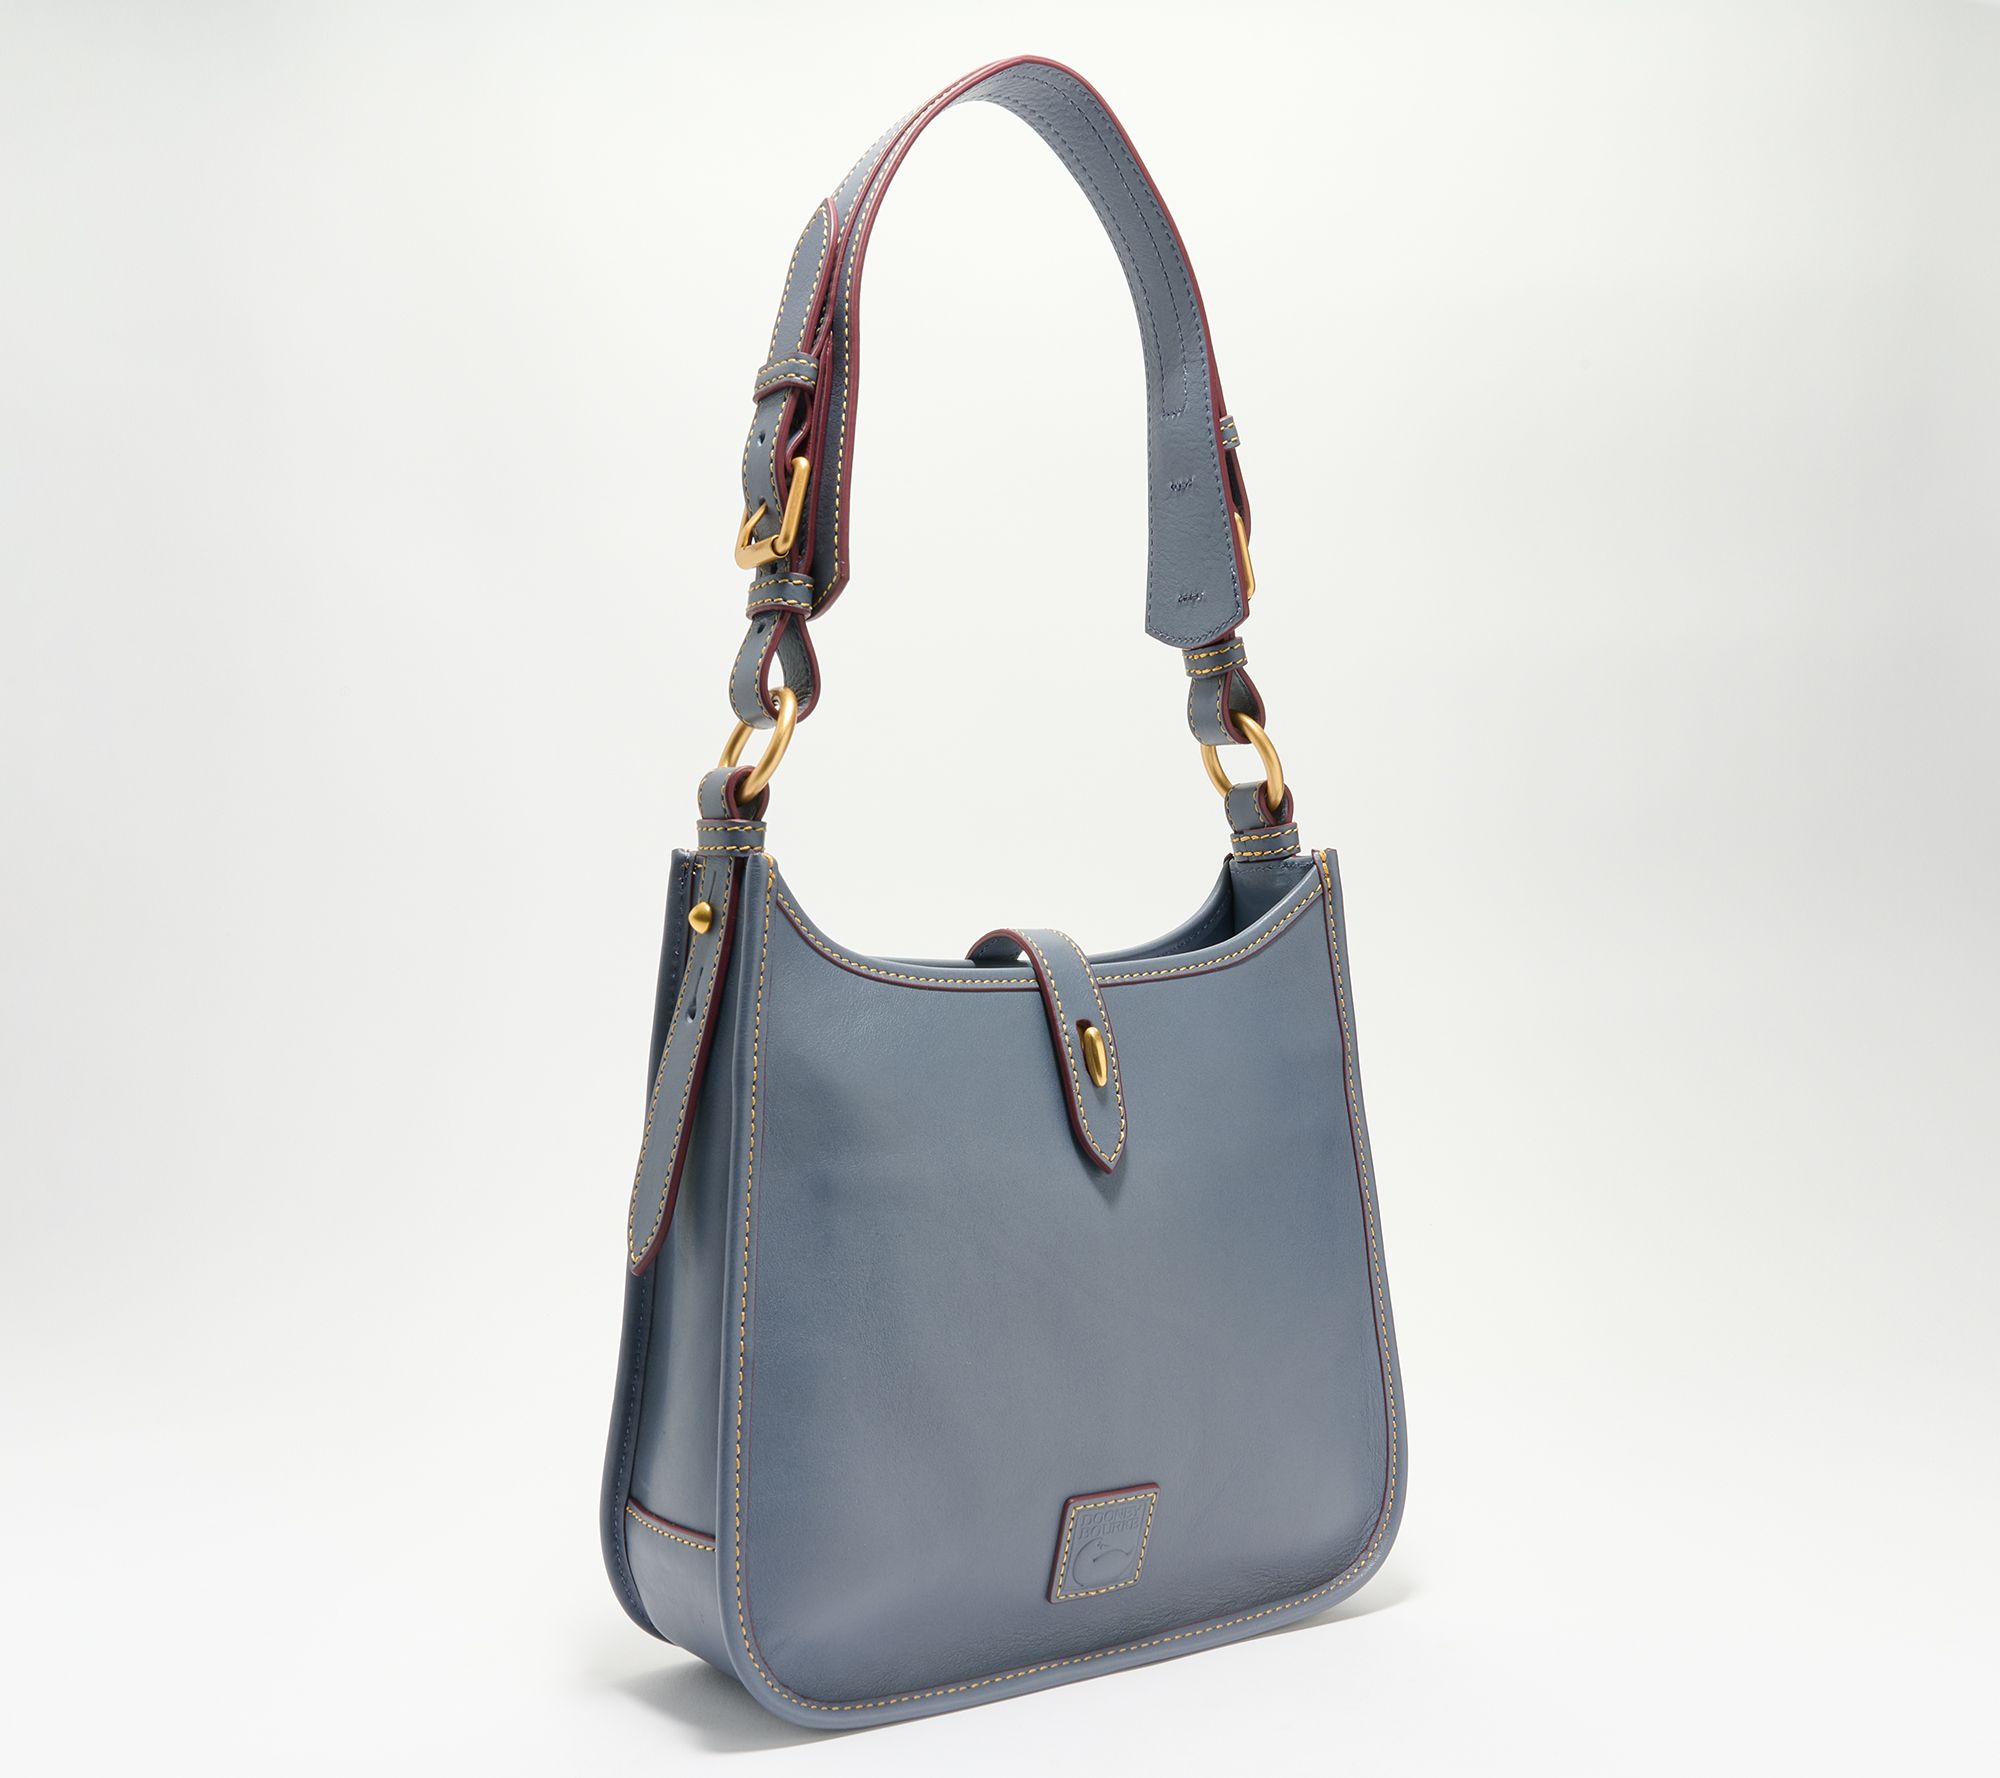 thepursesandhandbags.com  Dooney bourke handbags, Purses and handbags,  Fashion handbags